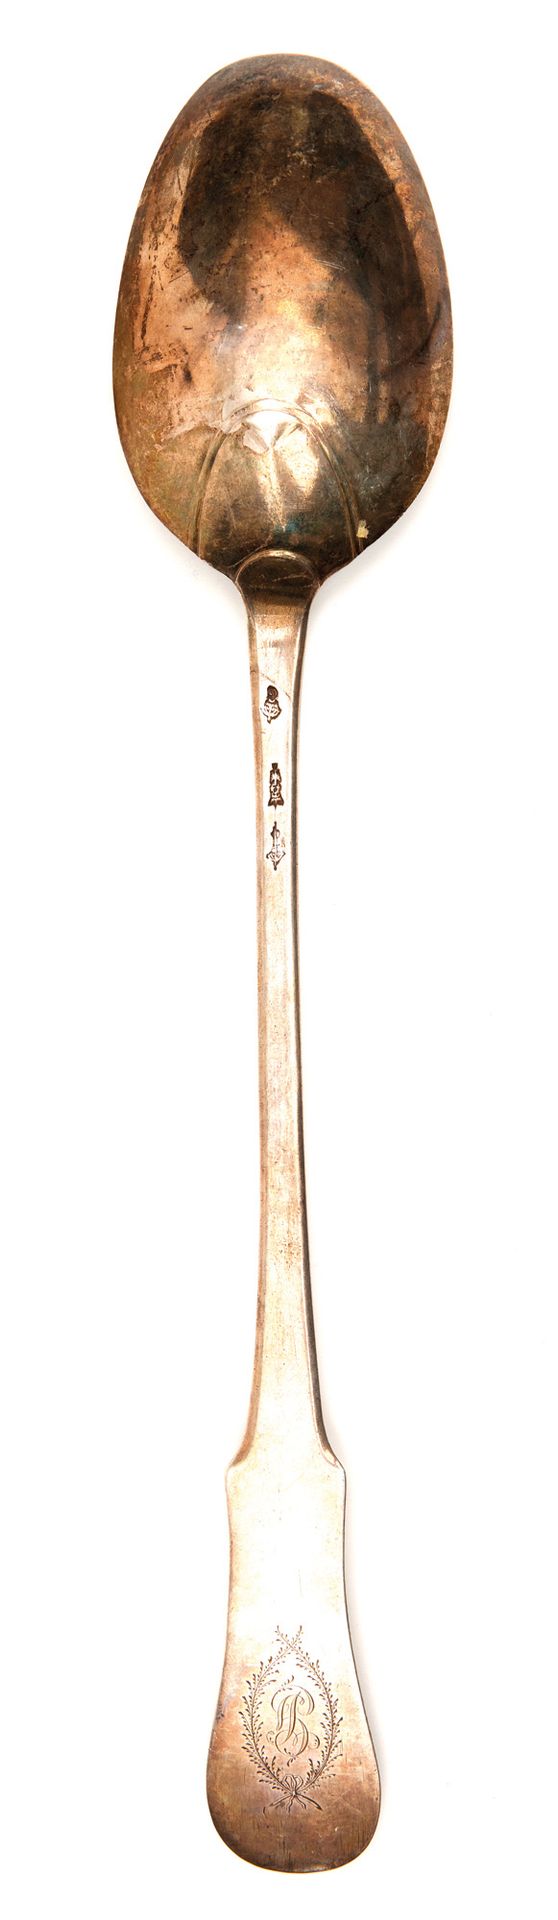 Cuillère à pot en argent 银壶勺

作者：皮埃尔-奥古斯丁-格鲁特，里尔，1748年

小提琴模型，刻有首字母 "GJ "的印记：收费，&hellip;